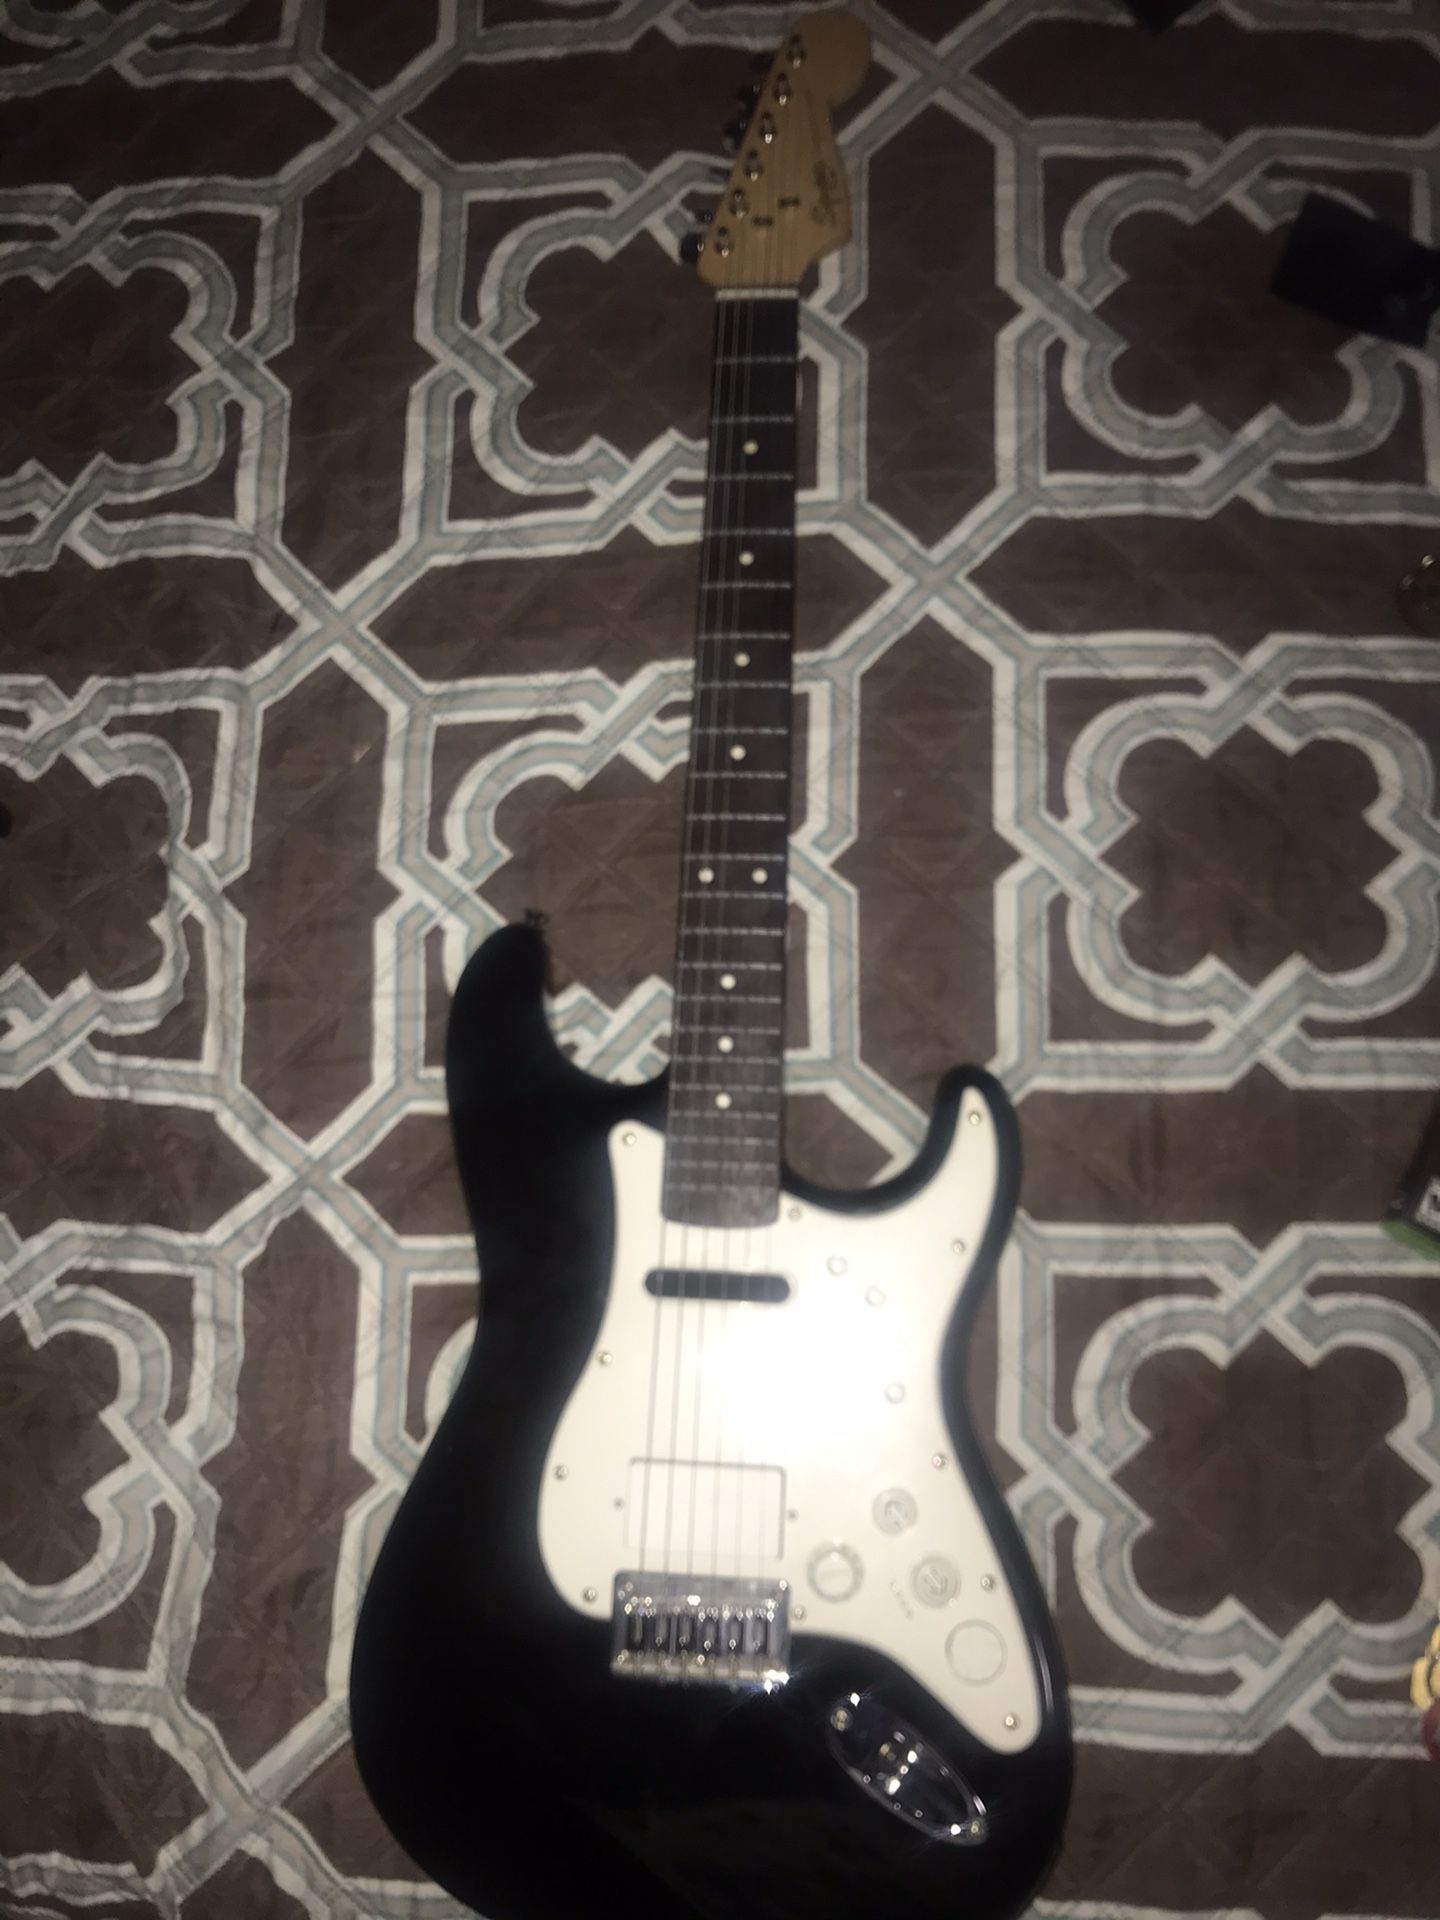 Real Fender electric guitar / rock mans controller